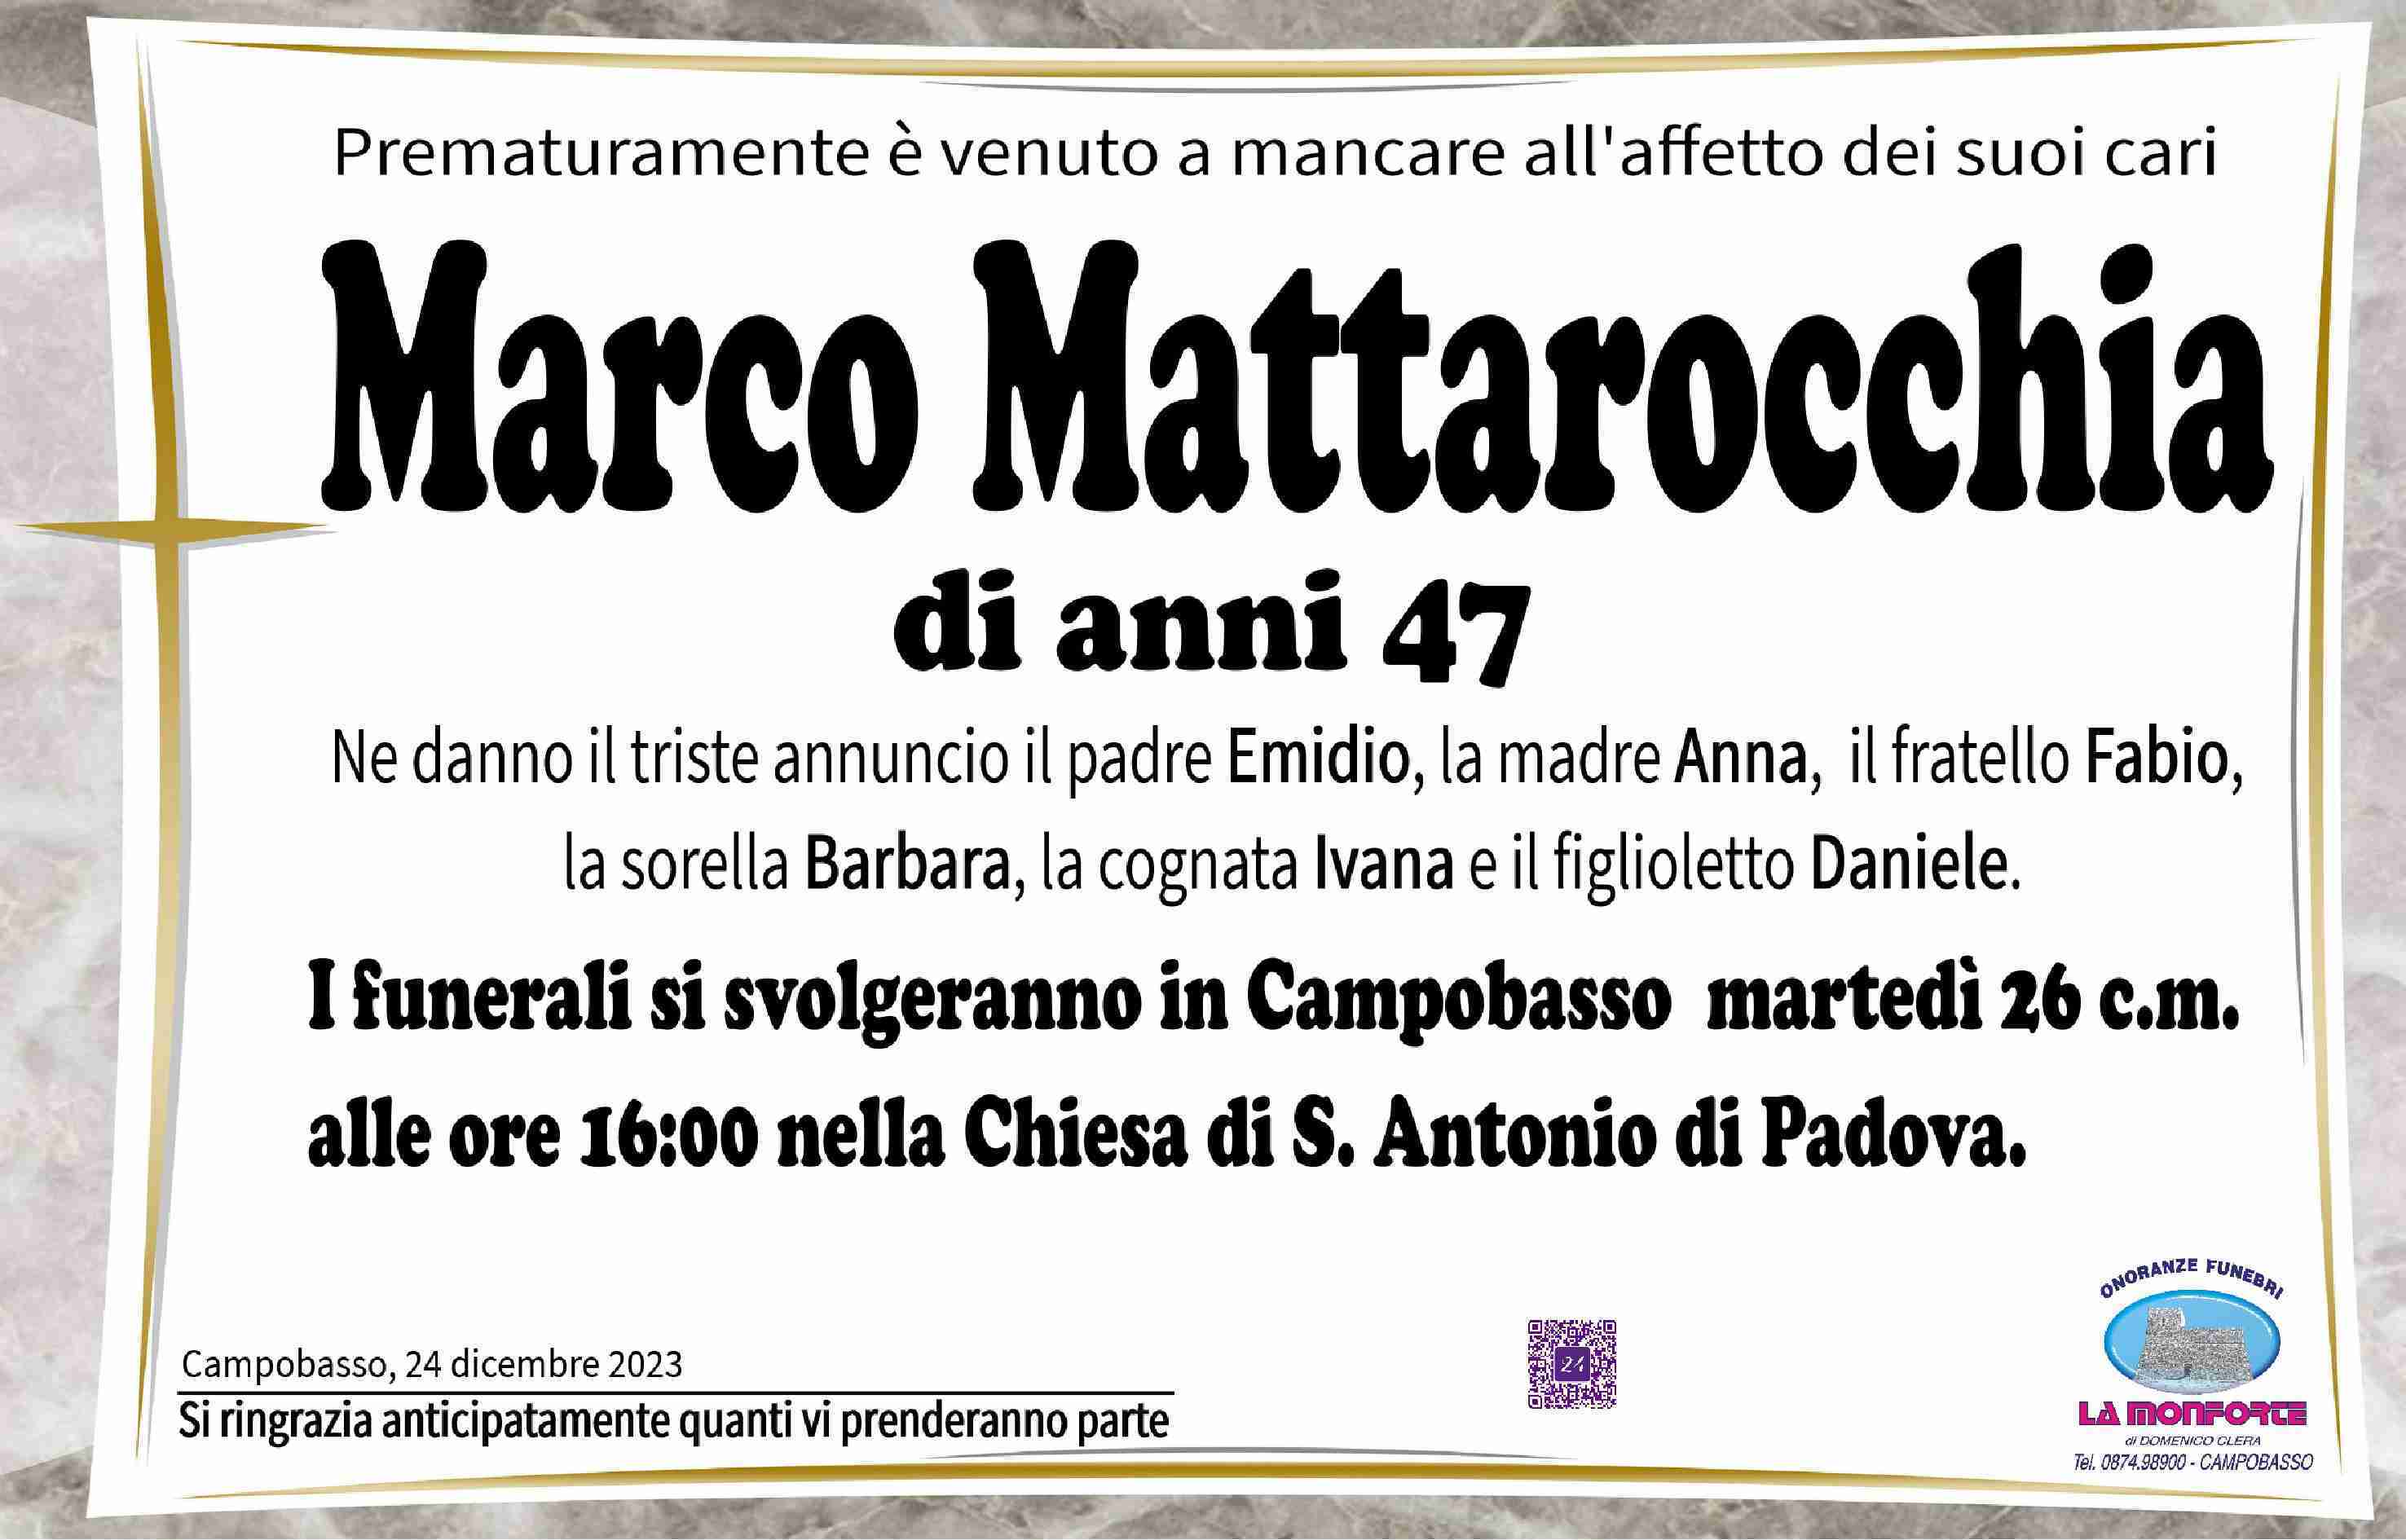 Marco Mattarocchia